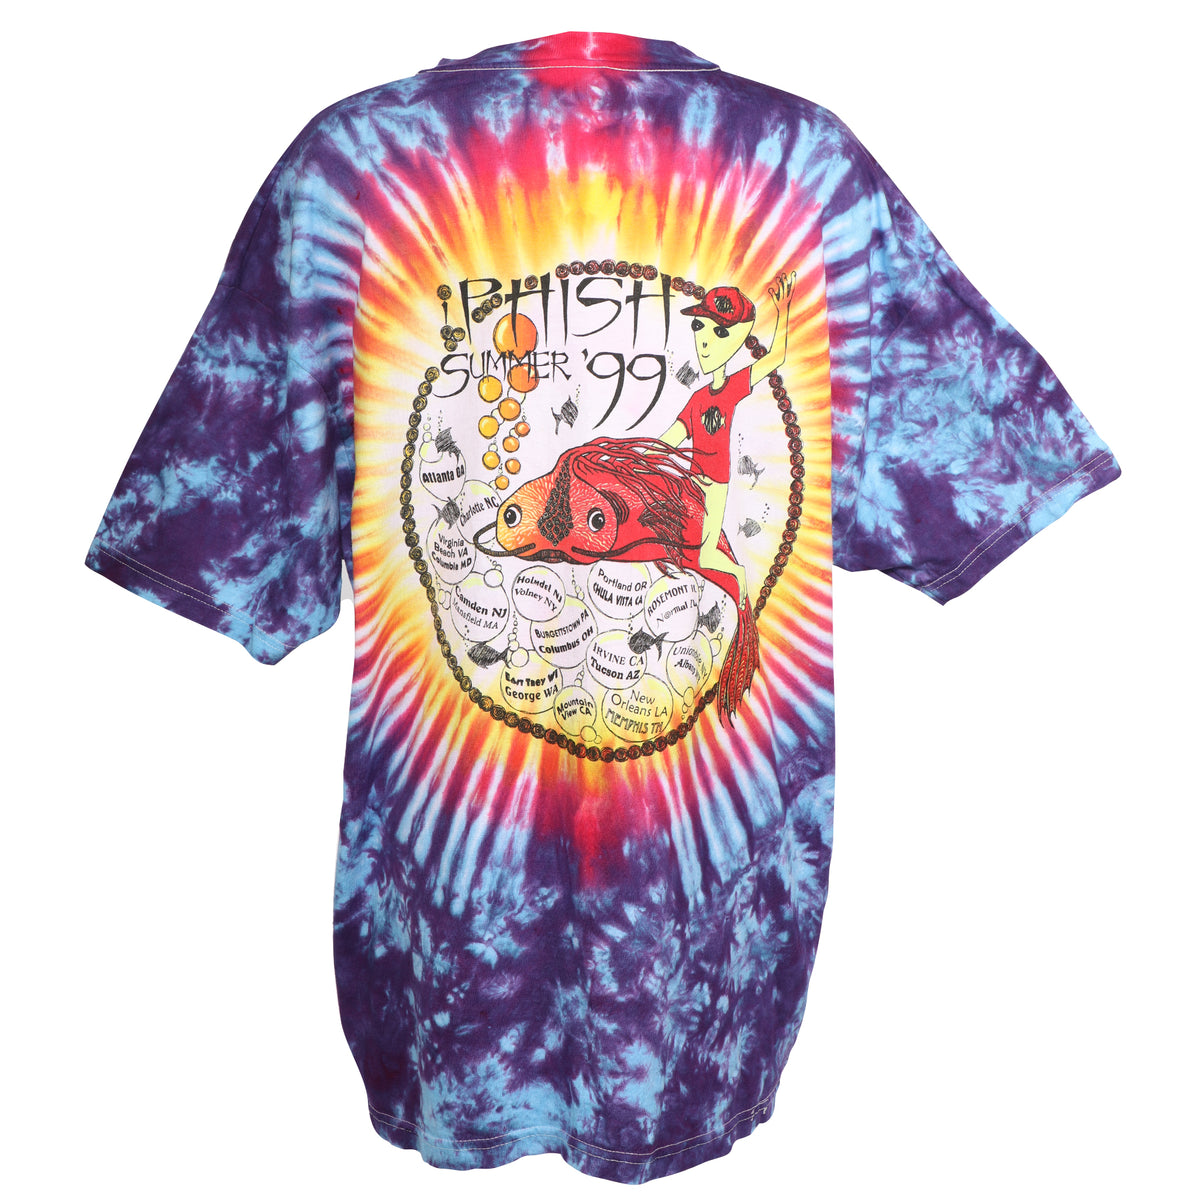 Phish 1999 Vintage Tour T Shirt